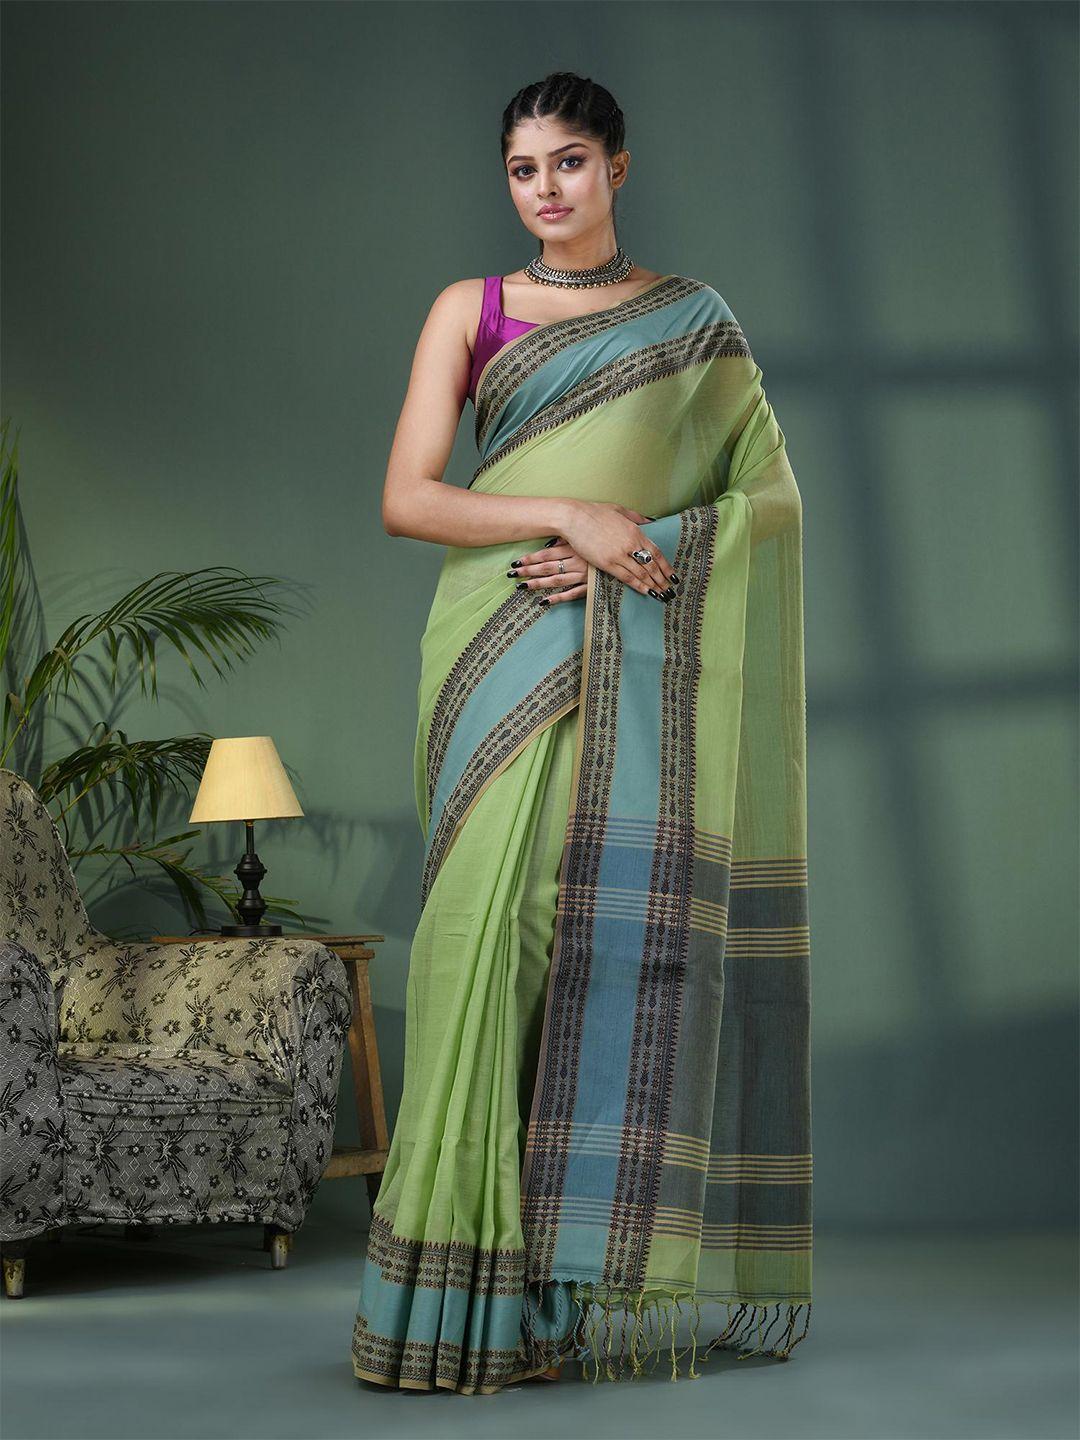 angoshobha woven design ethnic motifs printed pure cotton saree